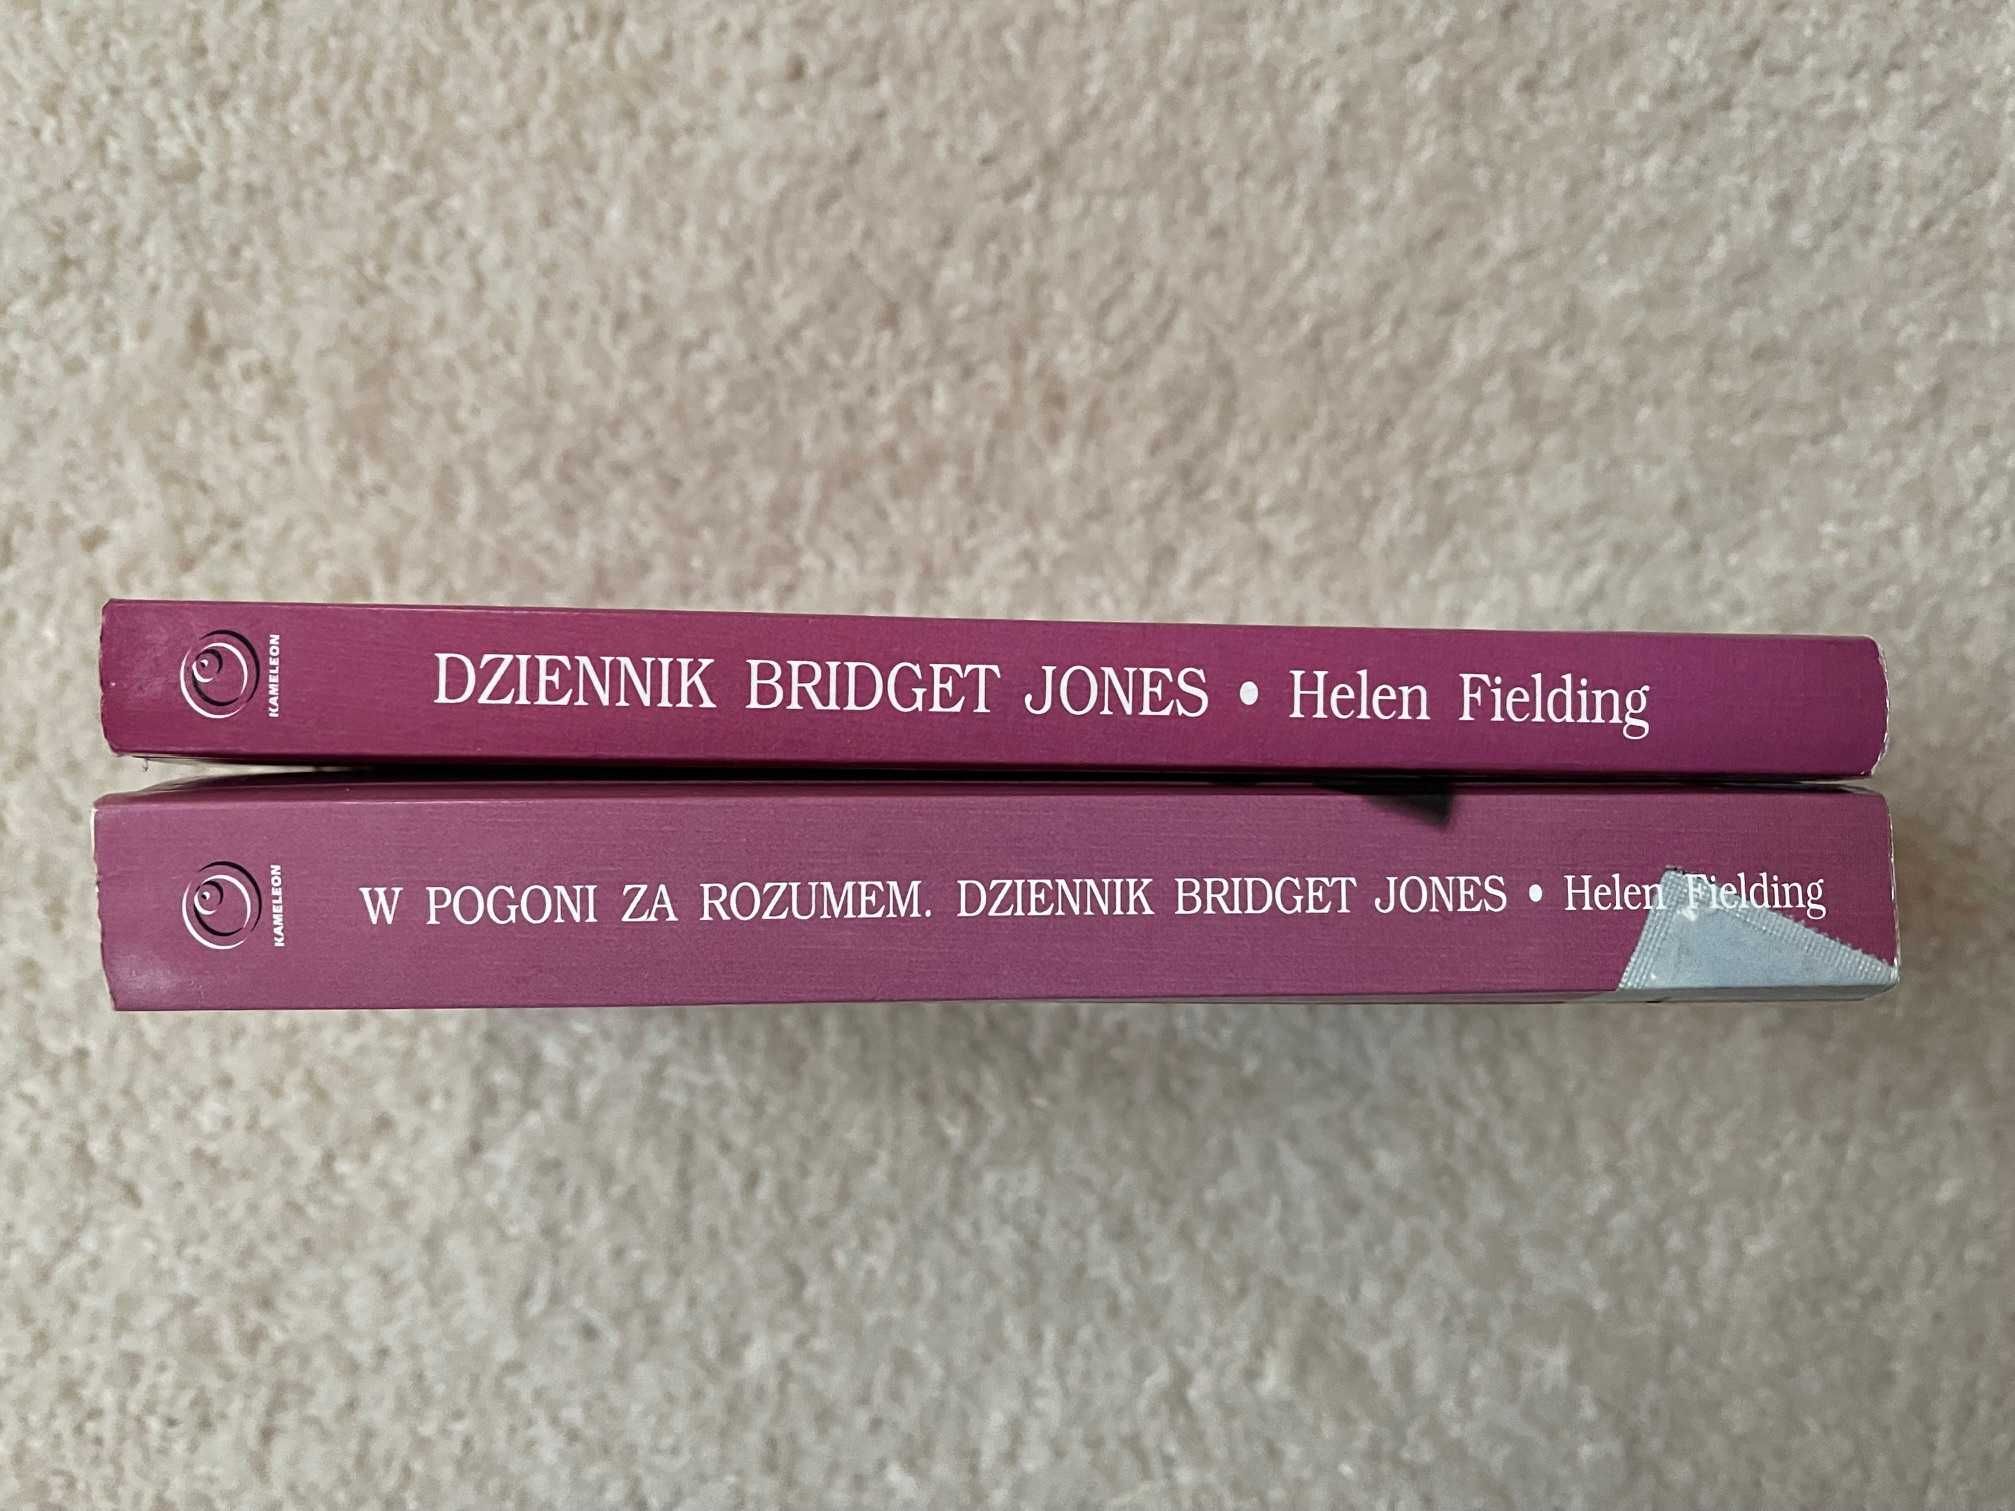 Dziennik Bridget Jones oraz W pogoni za rozumem Helen Fielding